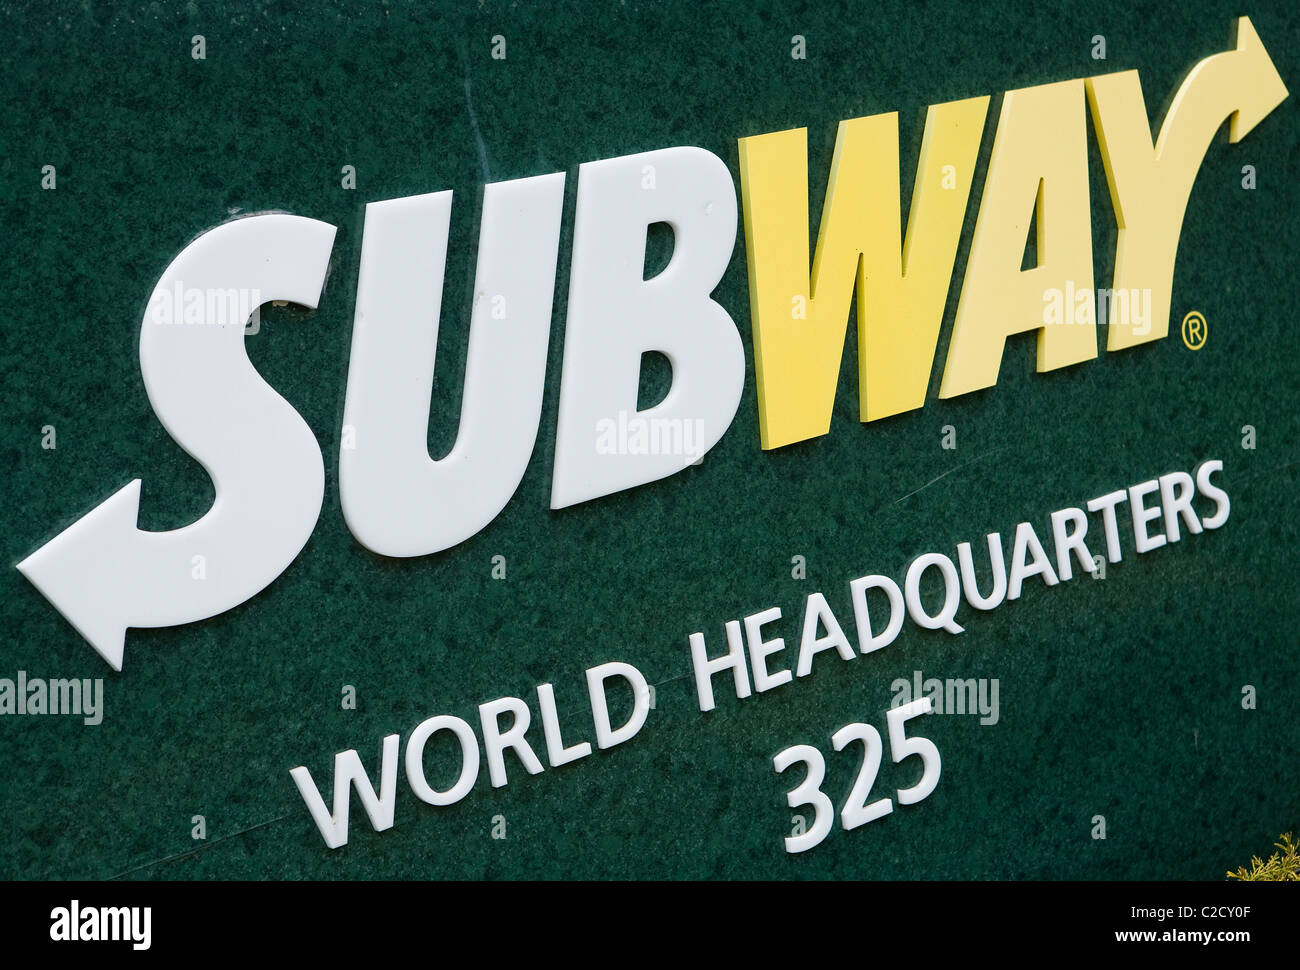 The World Headquarters of Subway Restaurants.  Stock Photo